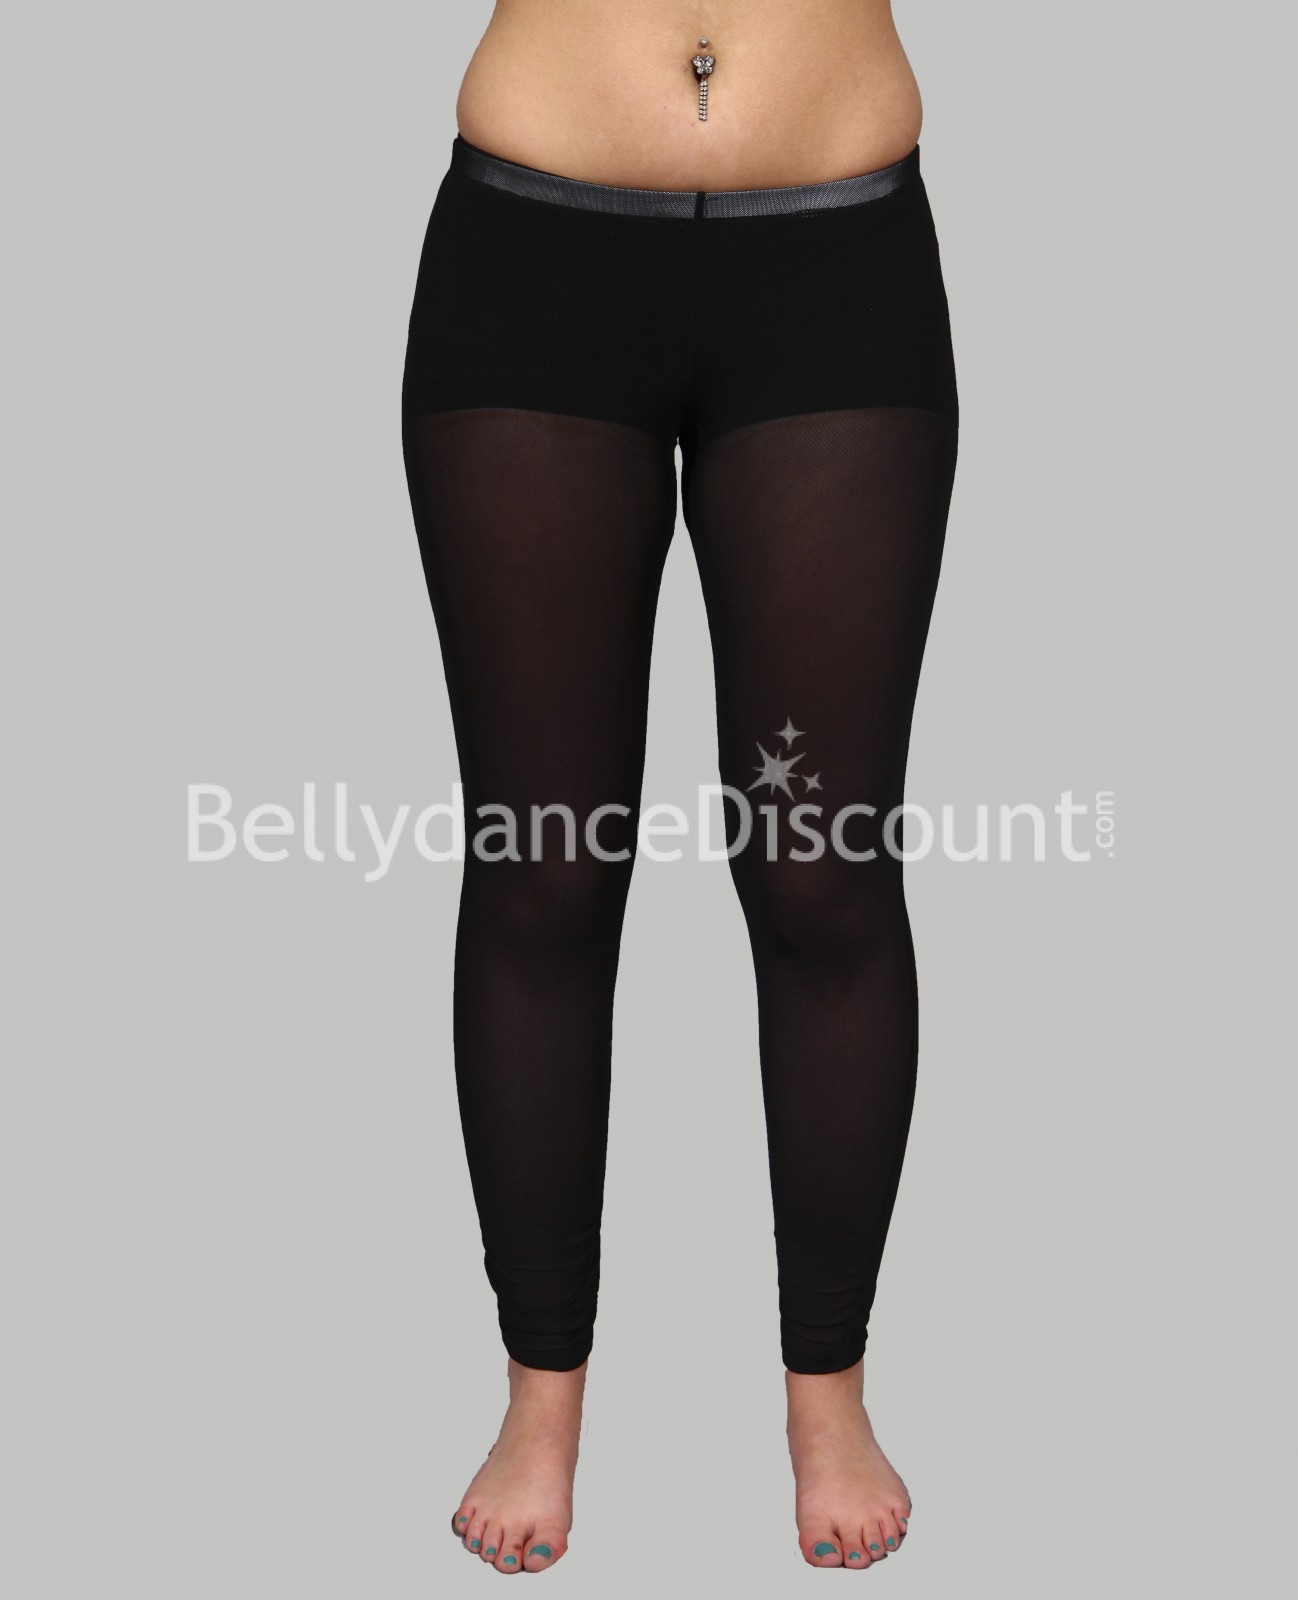 Black transparent legging for dance lessons - 18,90 €